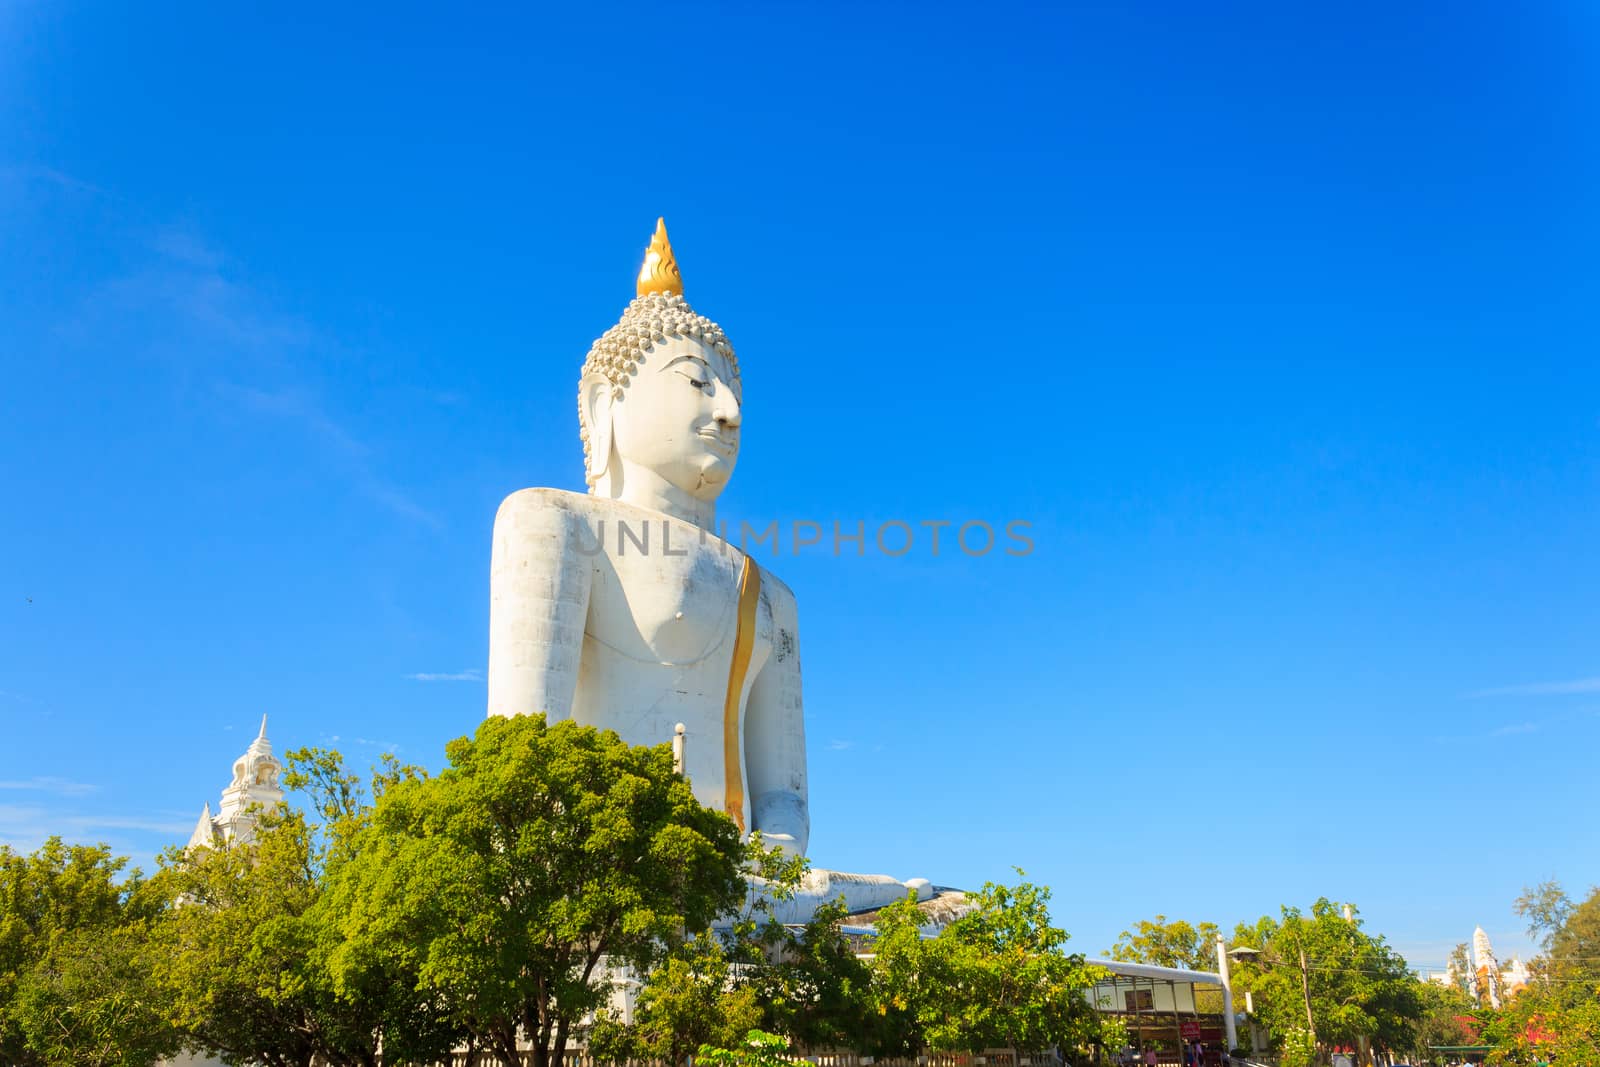 Big buddha statue, suphanburi province, Thailand by smudger087